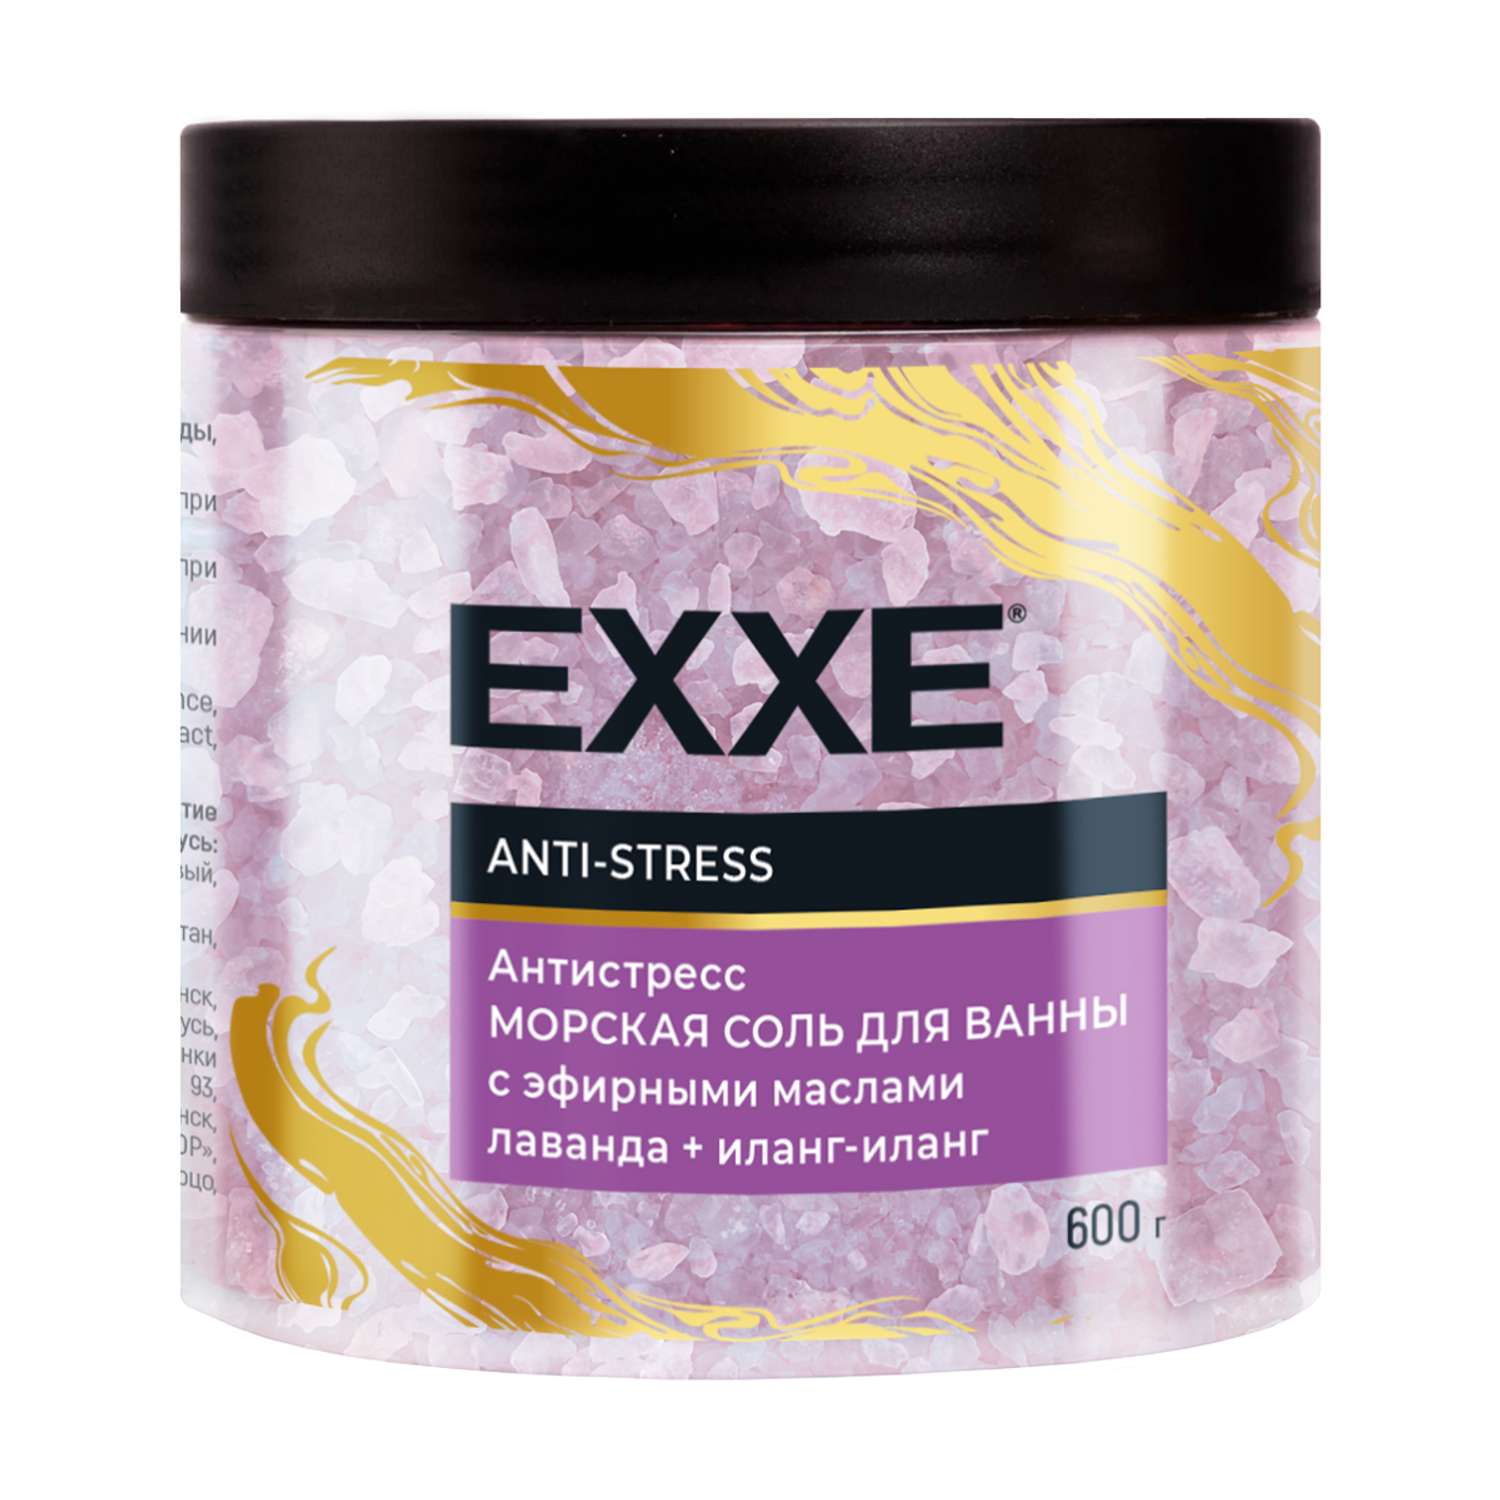 Соль для ванны EXXE Anti-stress 600 г - фото 1